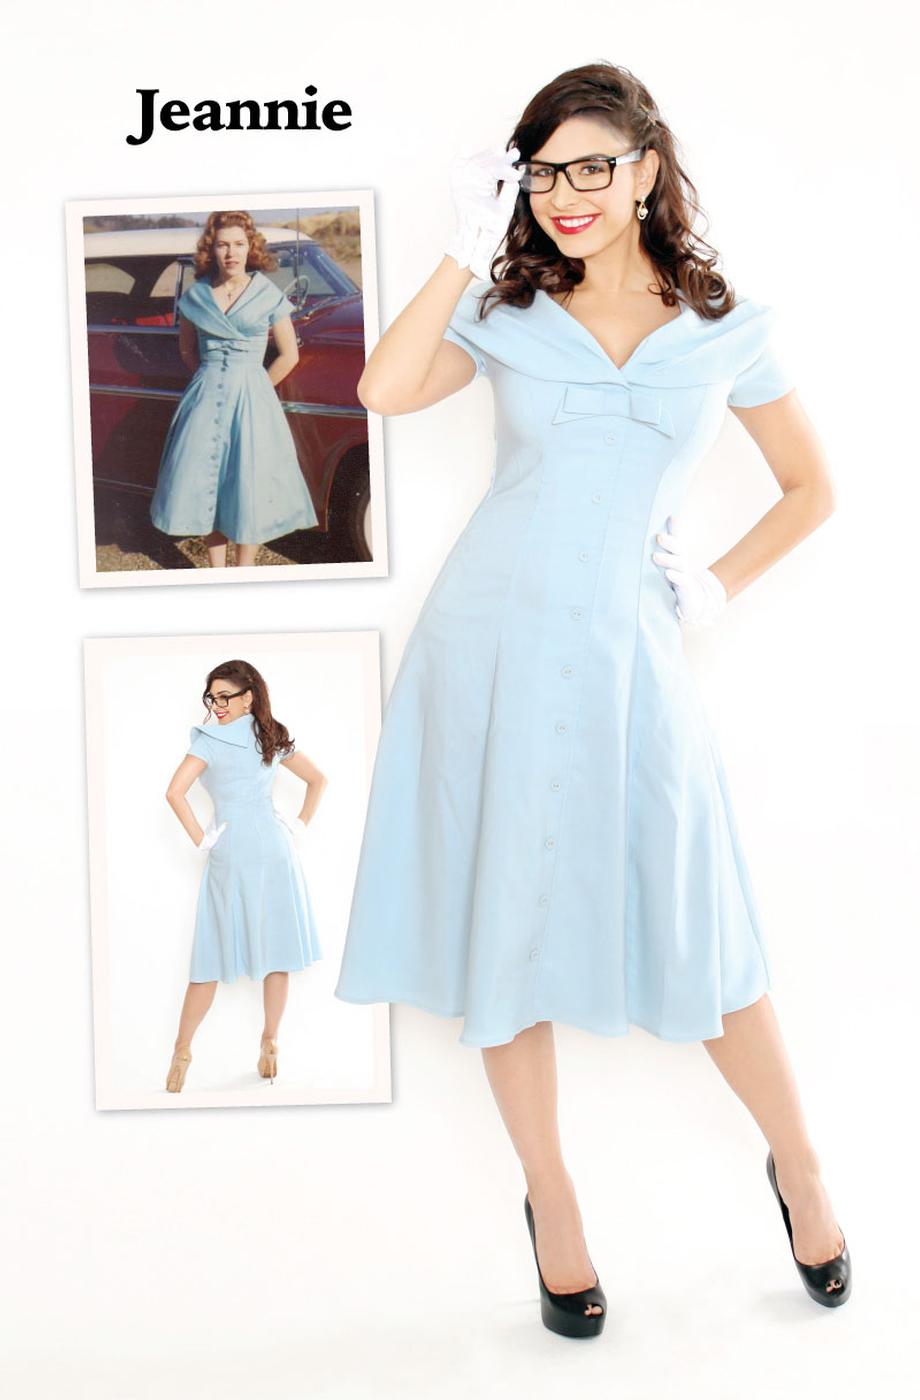 Jeannie BETTIE PAGE Retro Vintage 50s Style Dress